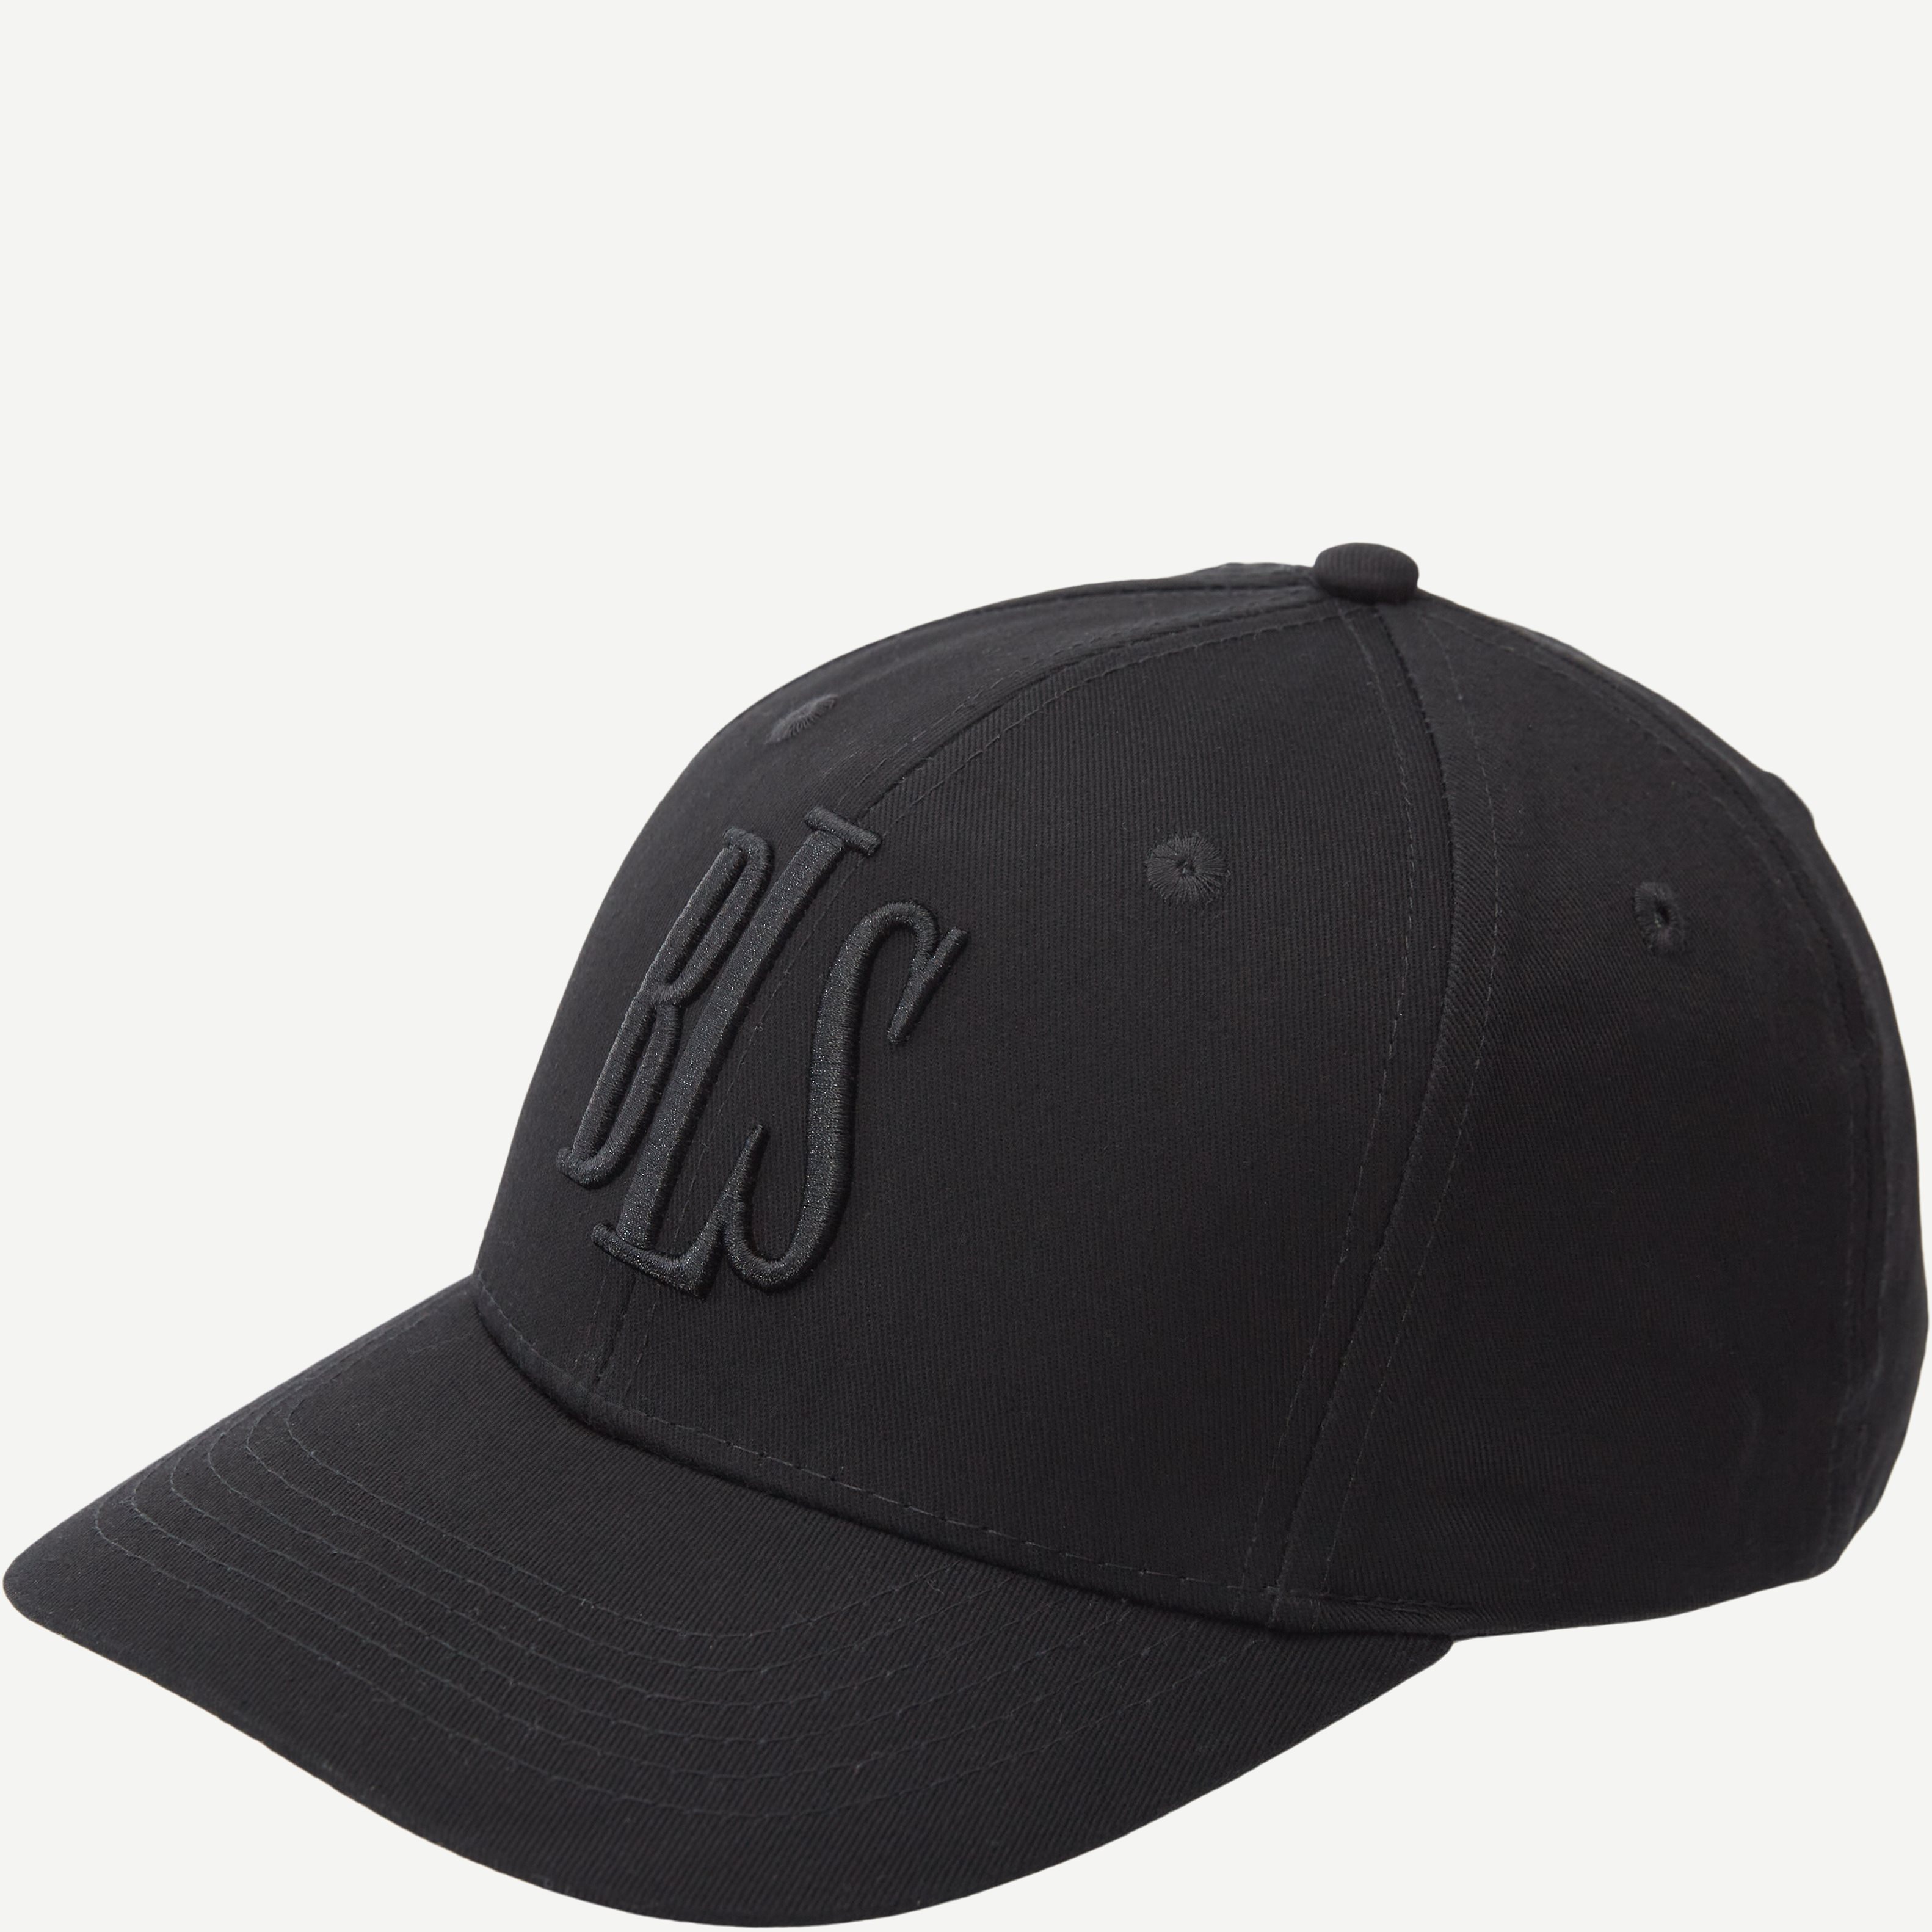 BLS Caps CLASSIC BASEBALL CAP TONAL BLACK 99103 Sort